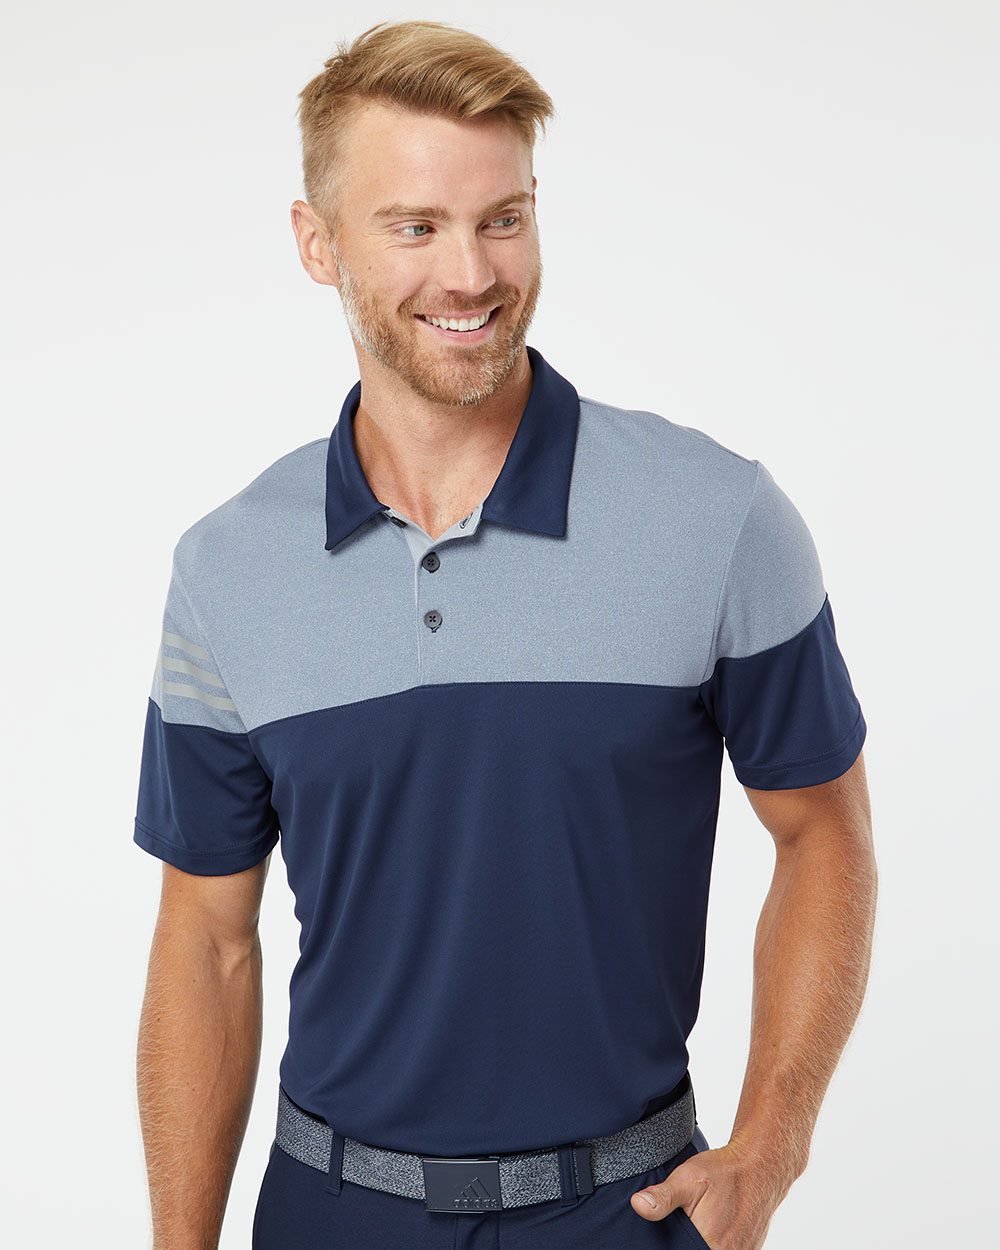 Heathered 3-Stripes Colorblock Sport Shirt